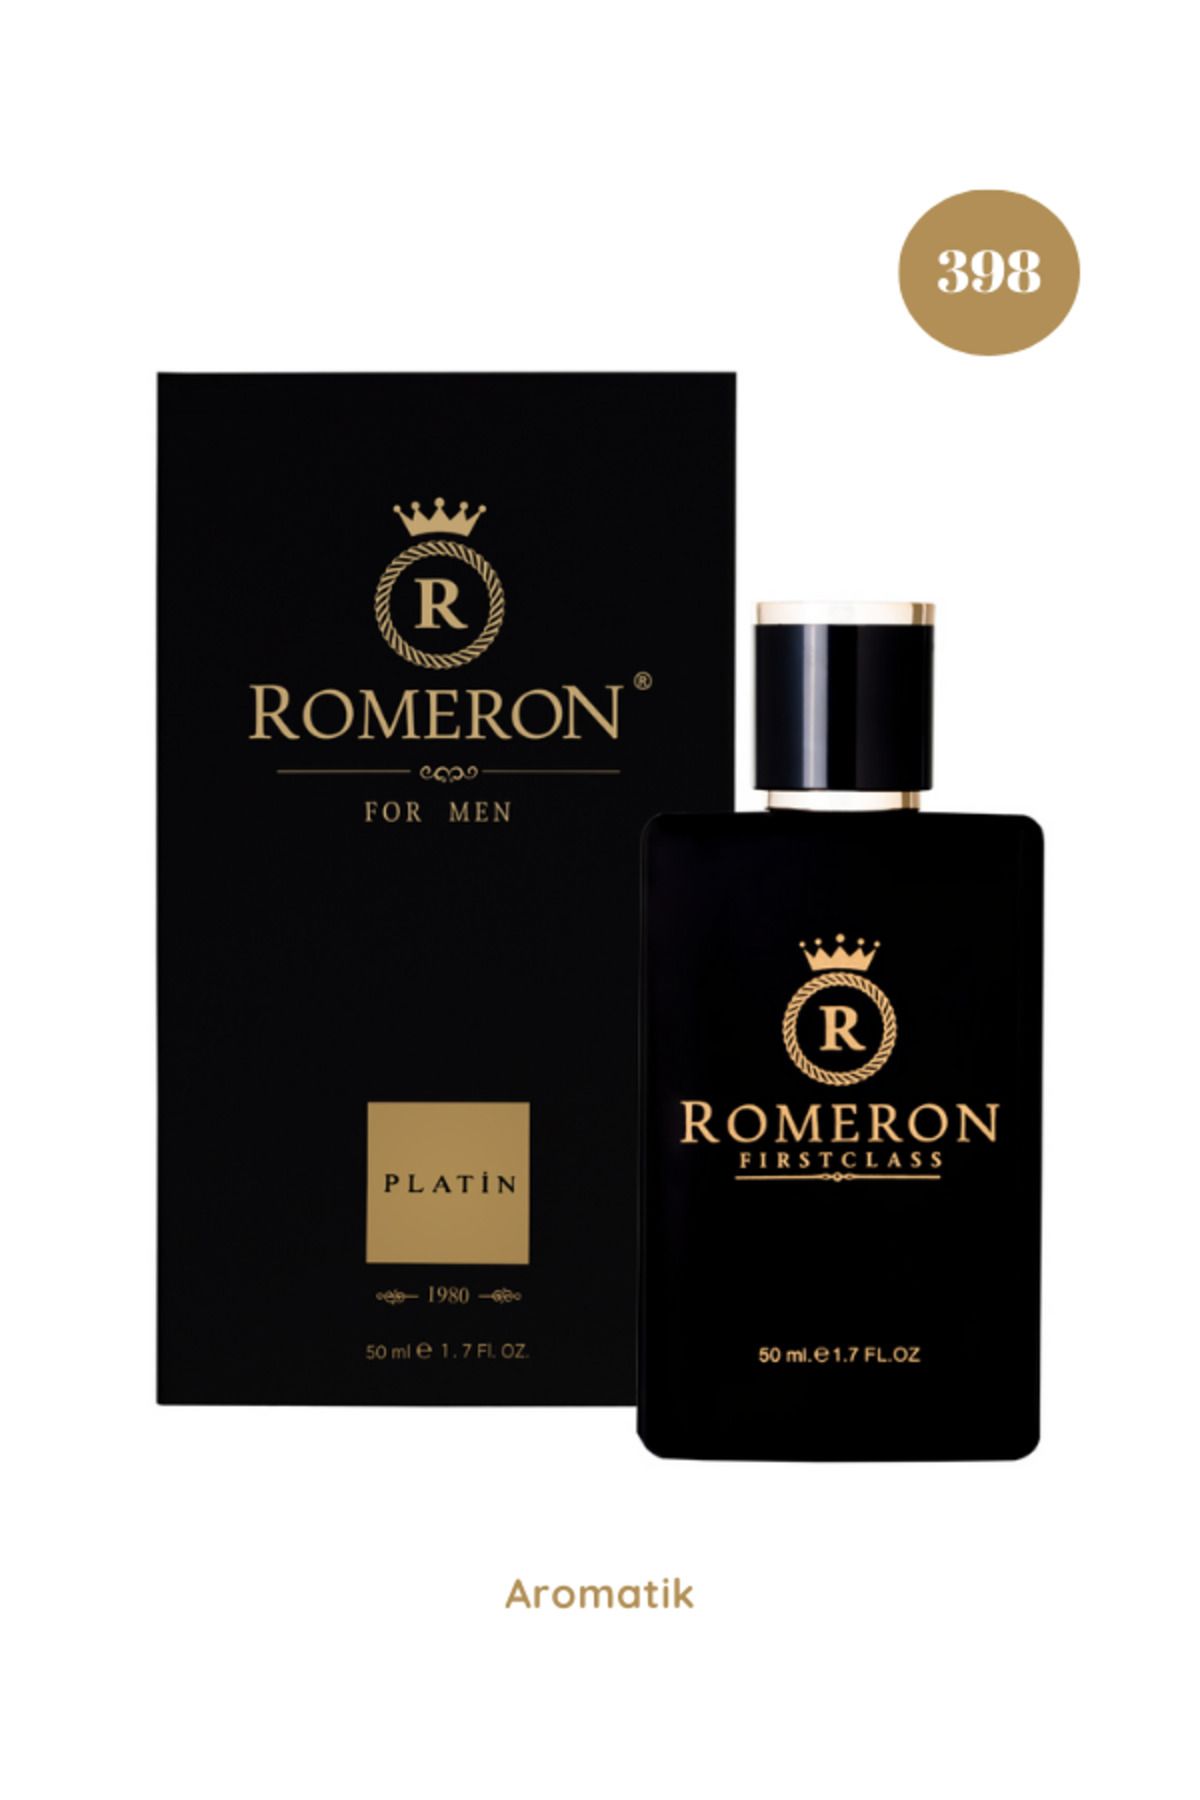 ROMERON عطر مردانه 398 پلاتینیوم ادوپرفیوم 50ml